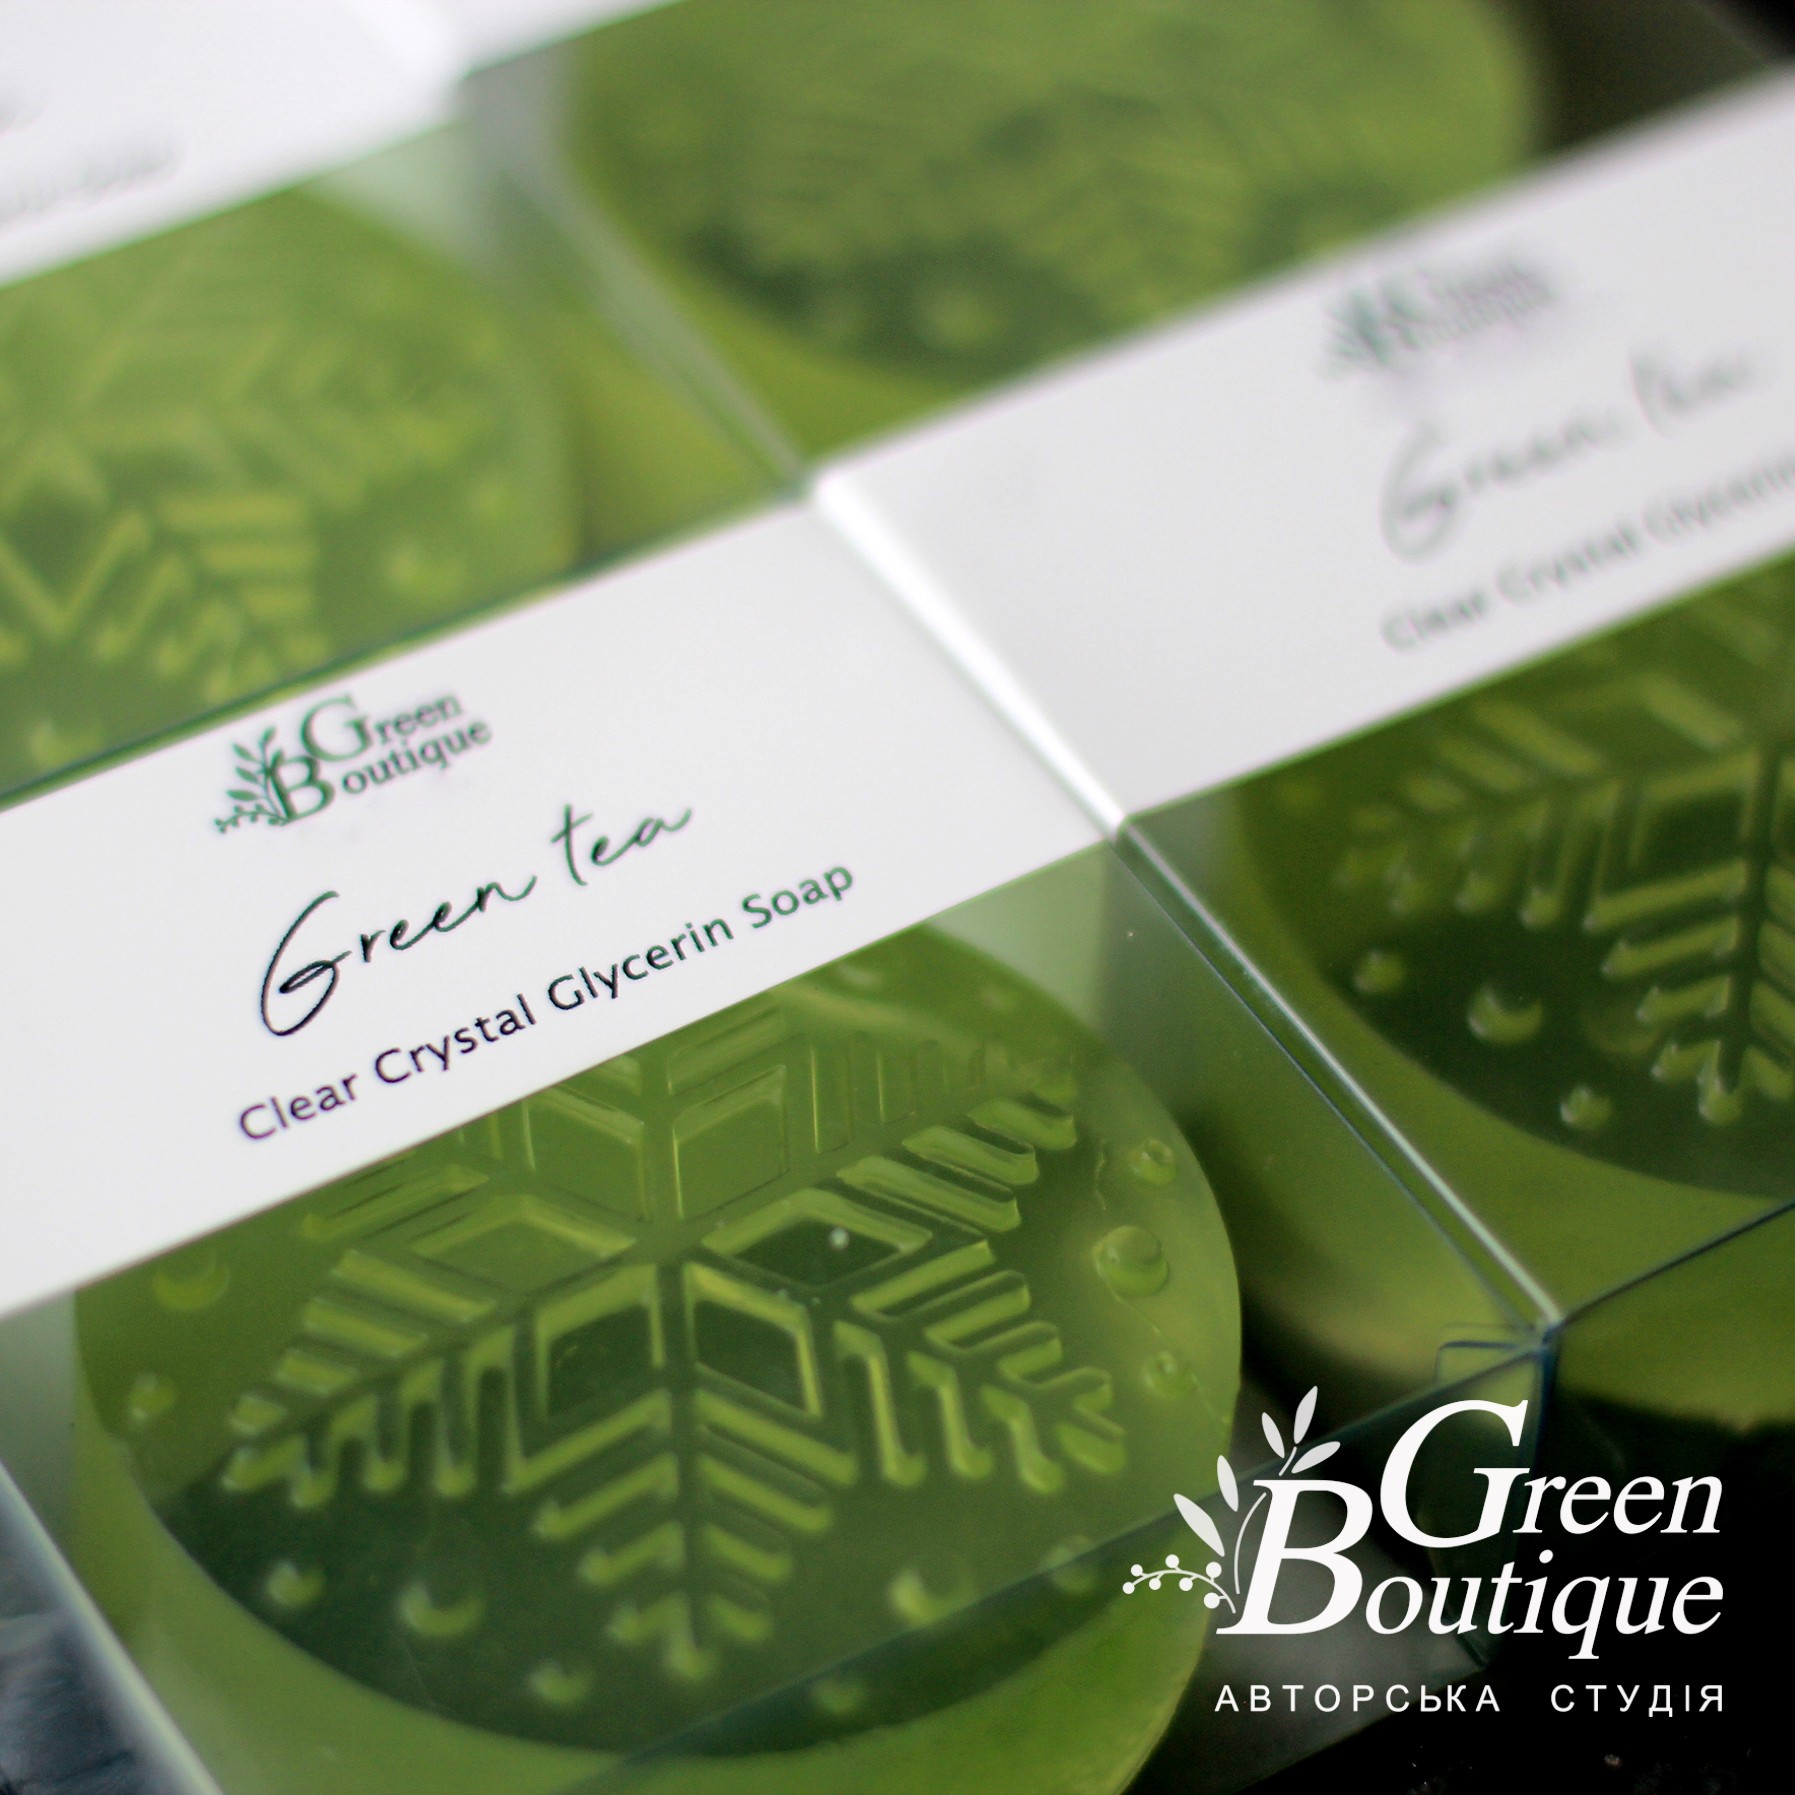 Natural kraft soap Green tea